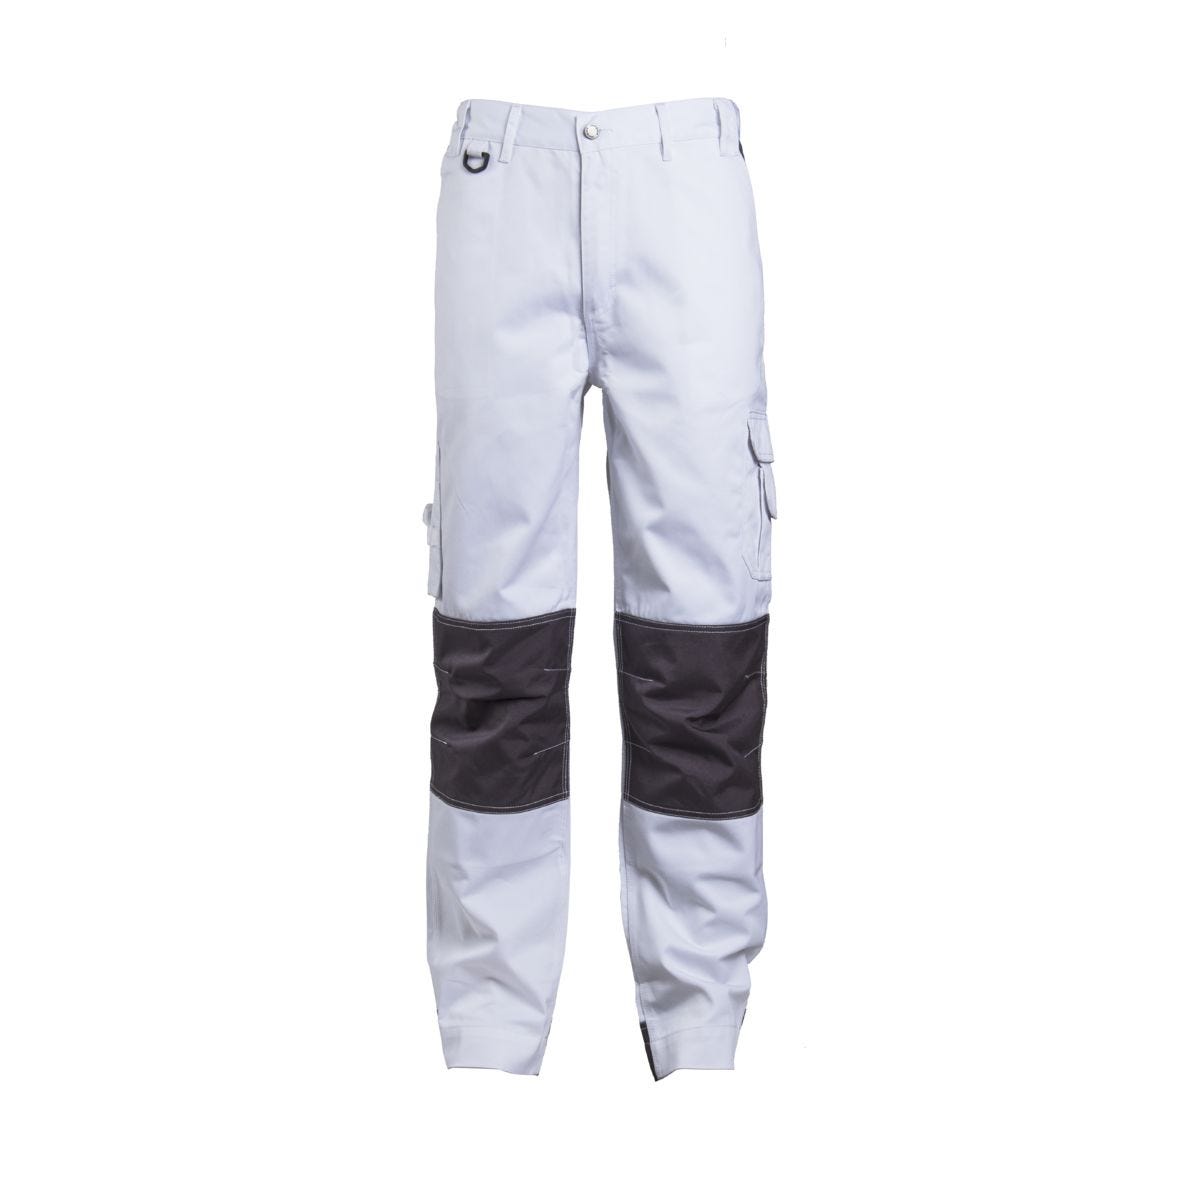 Pantalon CLASS blanc - COVERGUARD - Taille XS 0